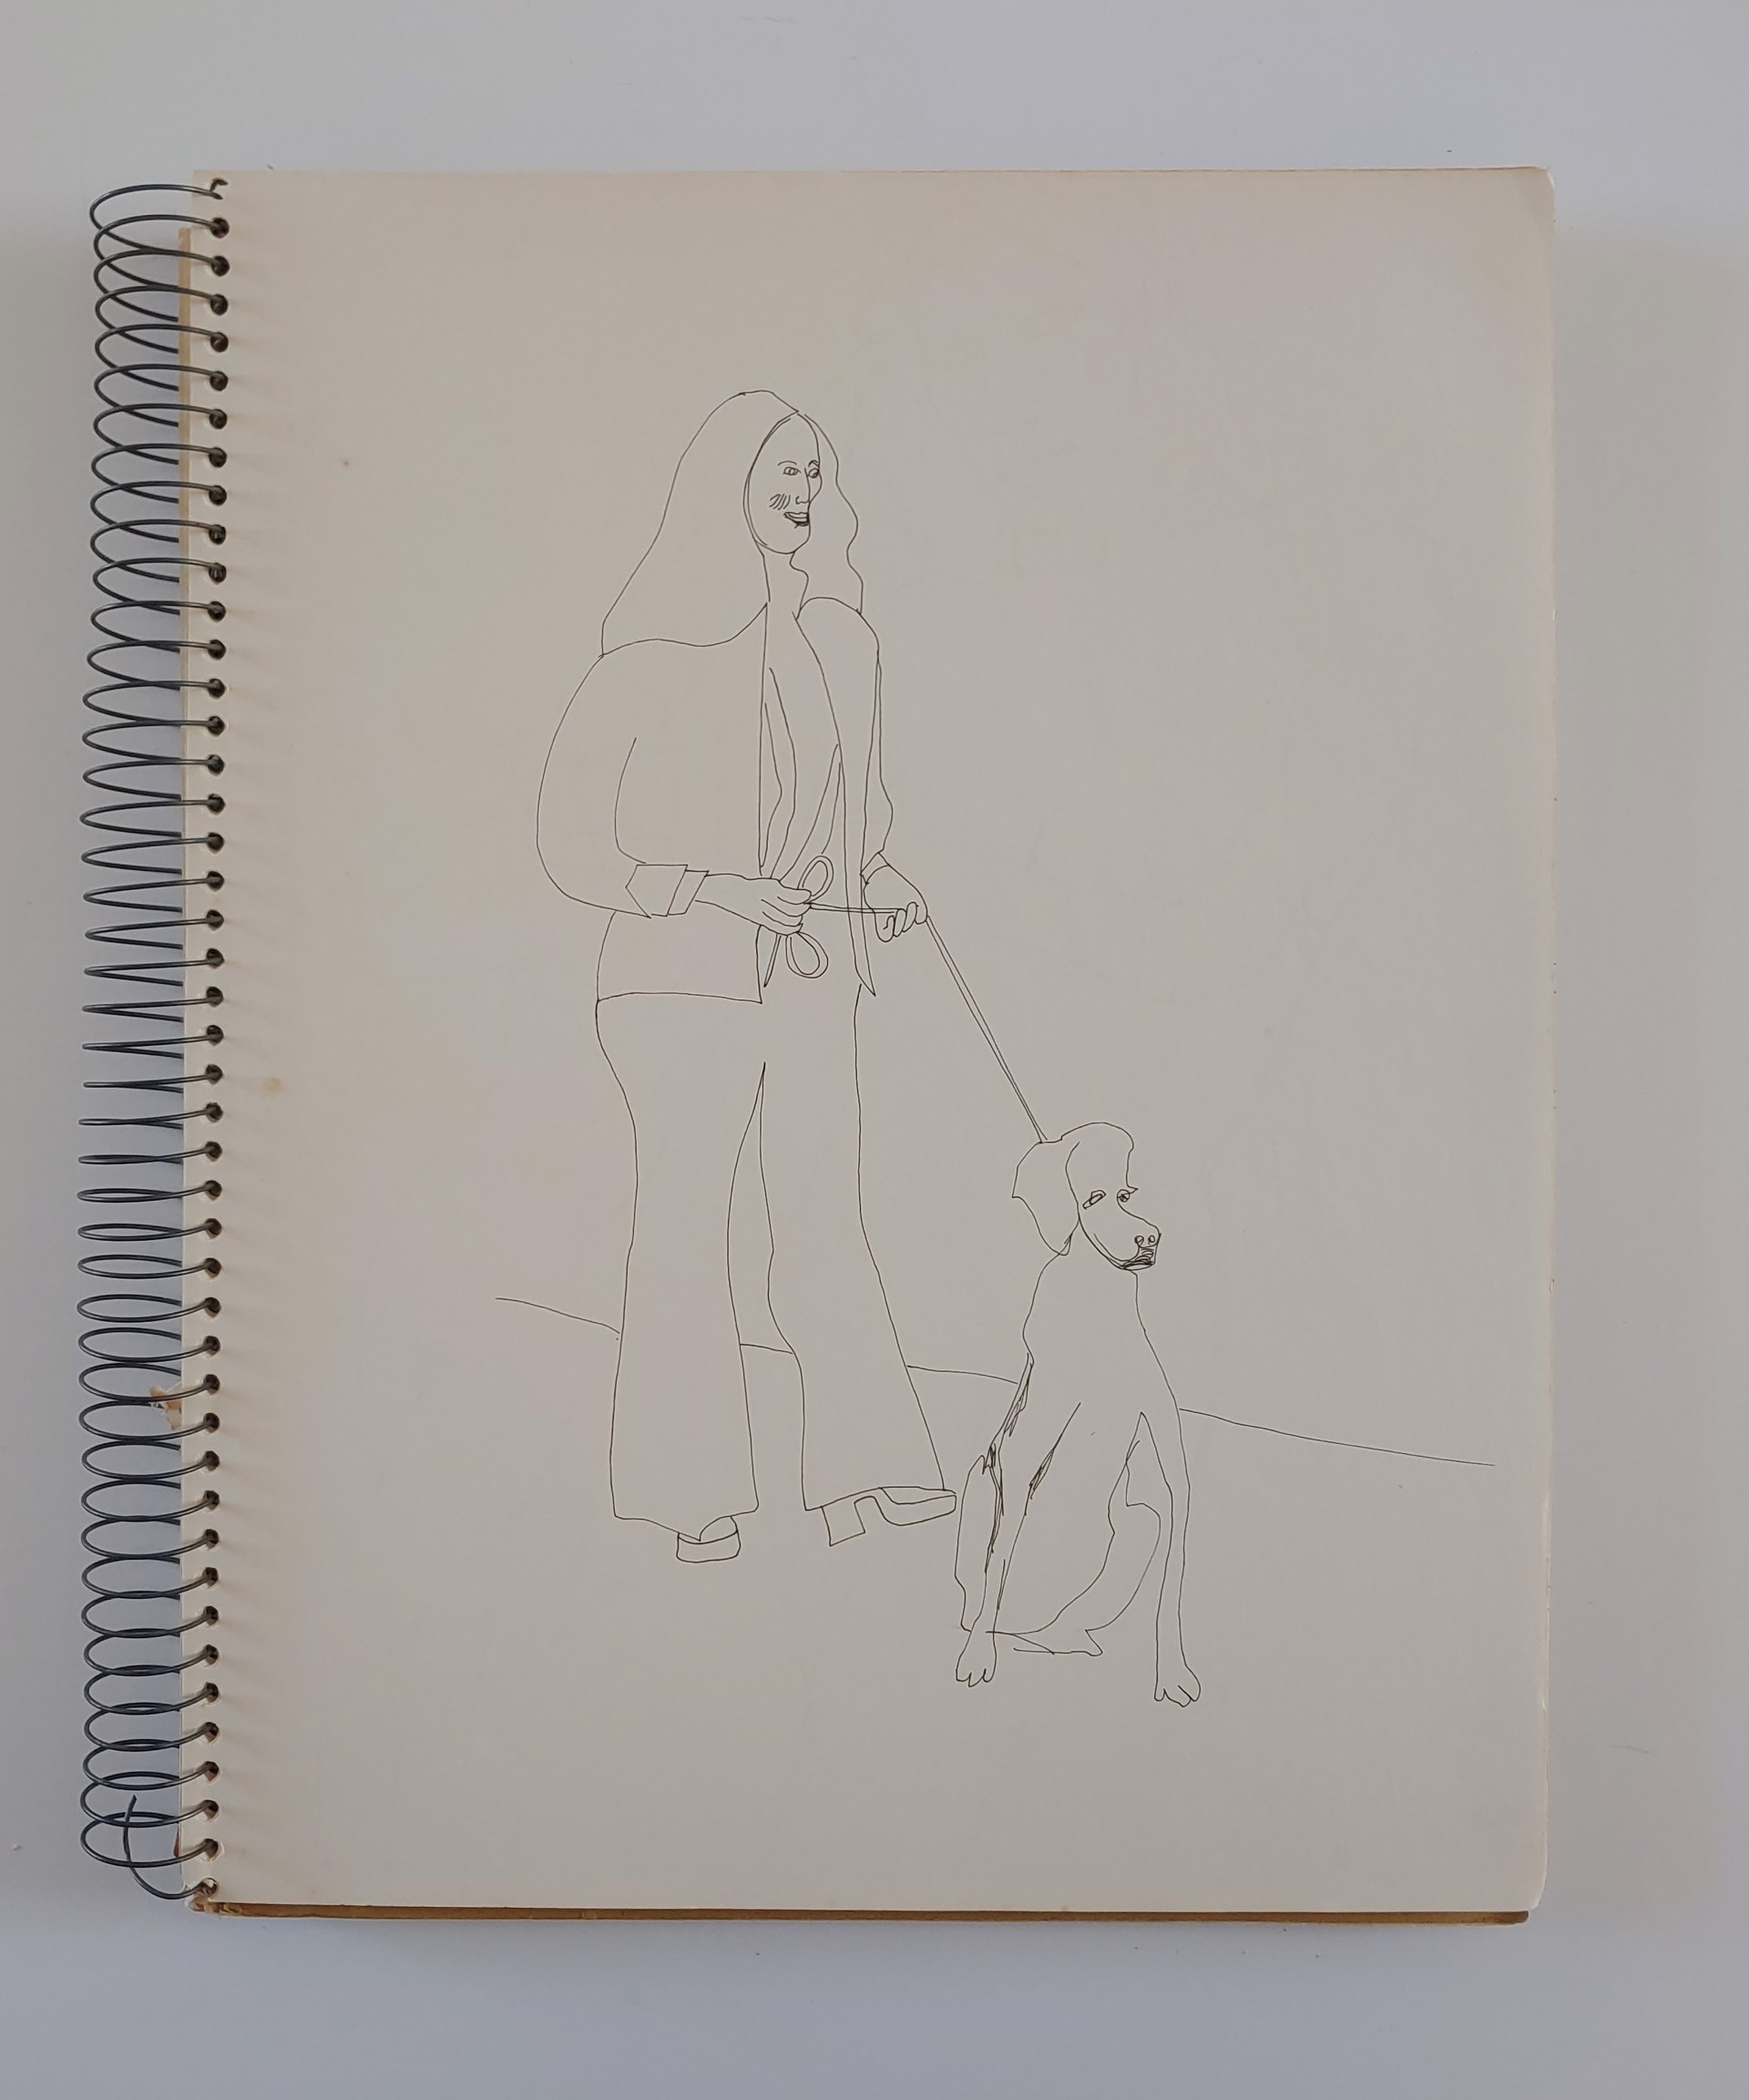 February 1973 Sketchbook by David Amdur